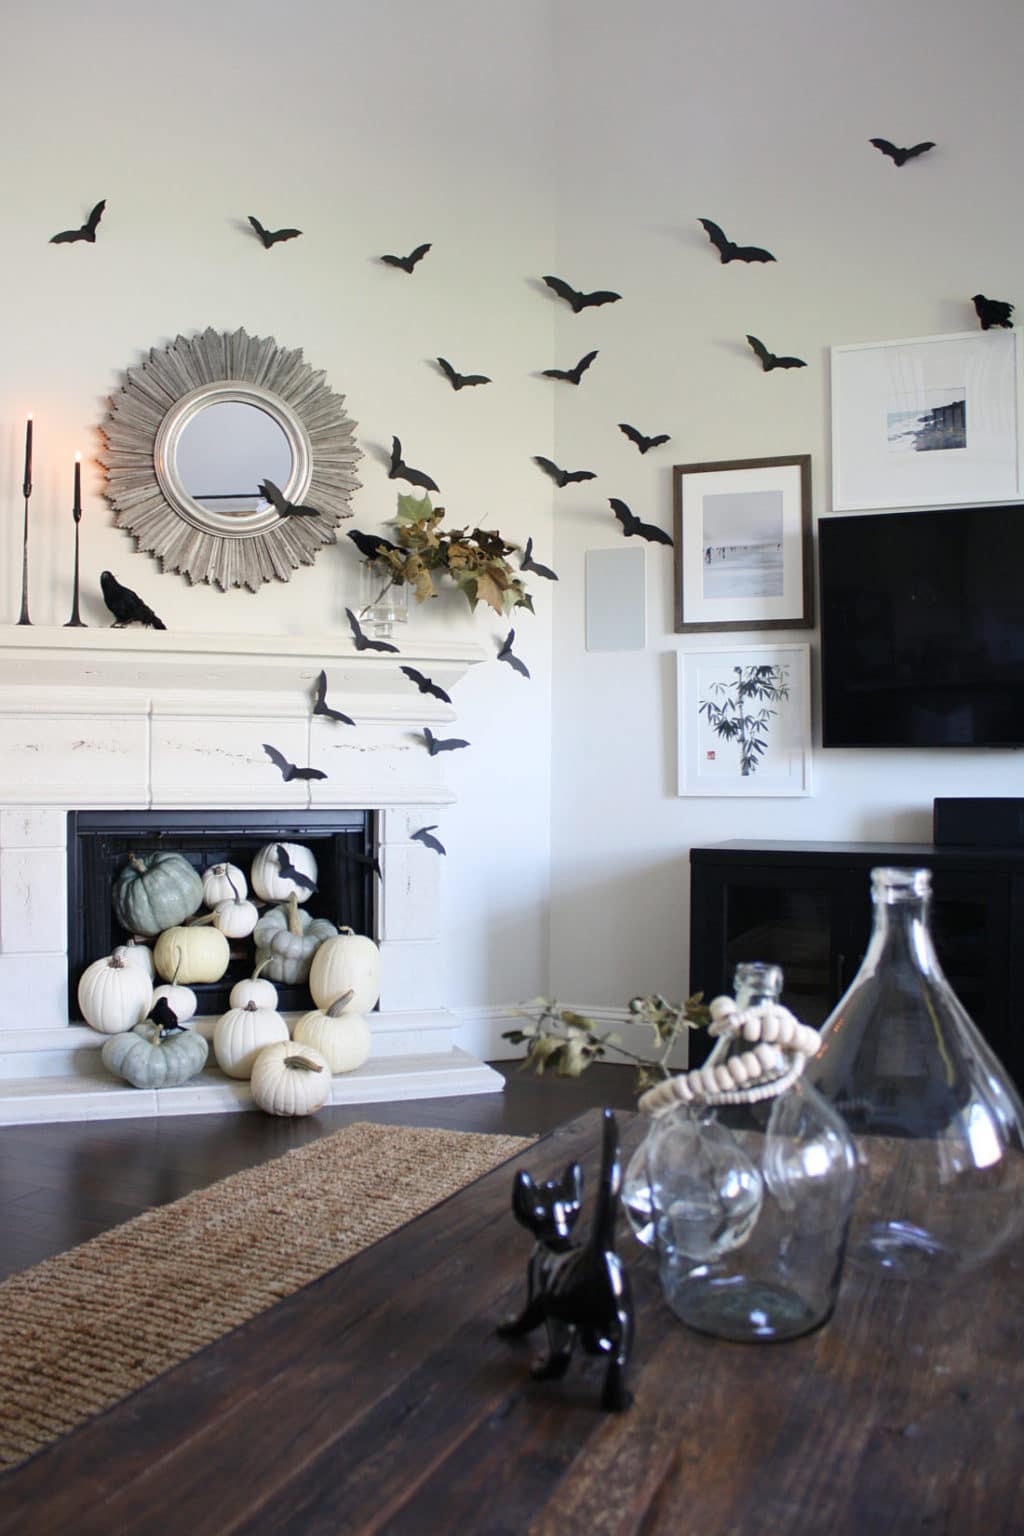 Paper bats make beautiful decor for Halloween!